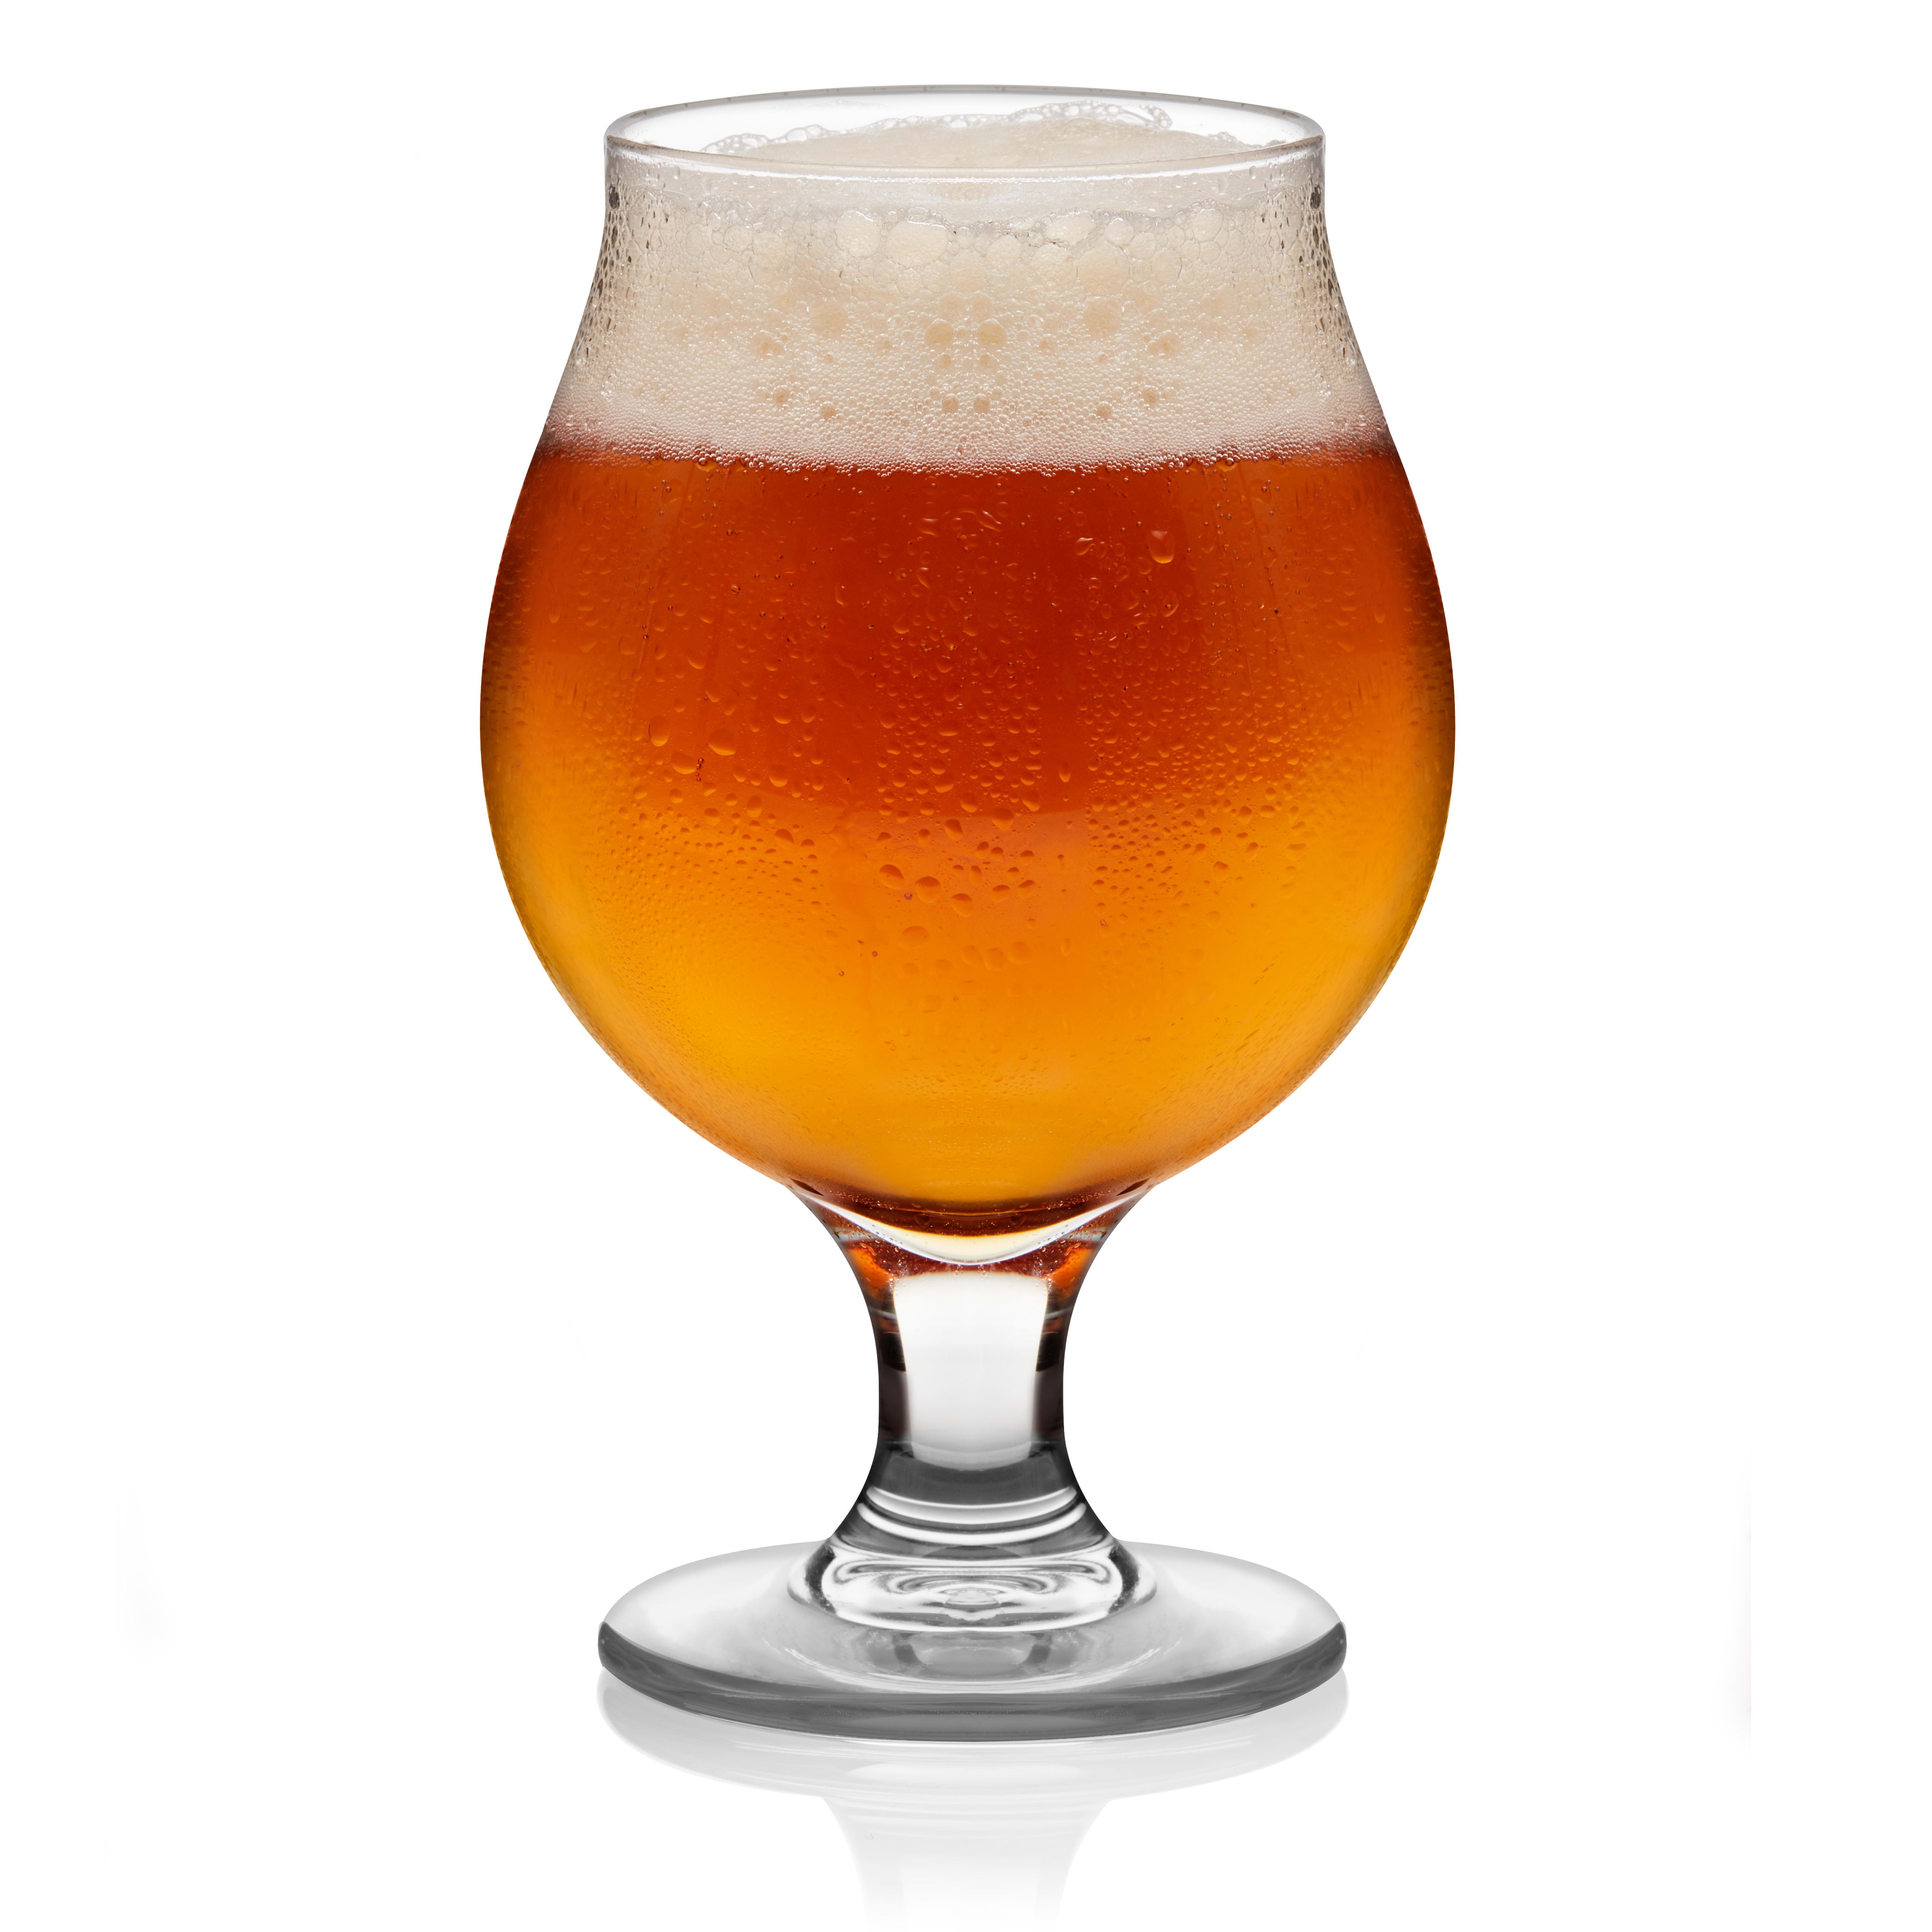 Specialtiy Belgium Drinkware for Home Bars! Libbey Belgian Beer Glass 16 oz 